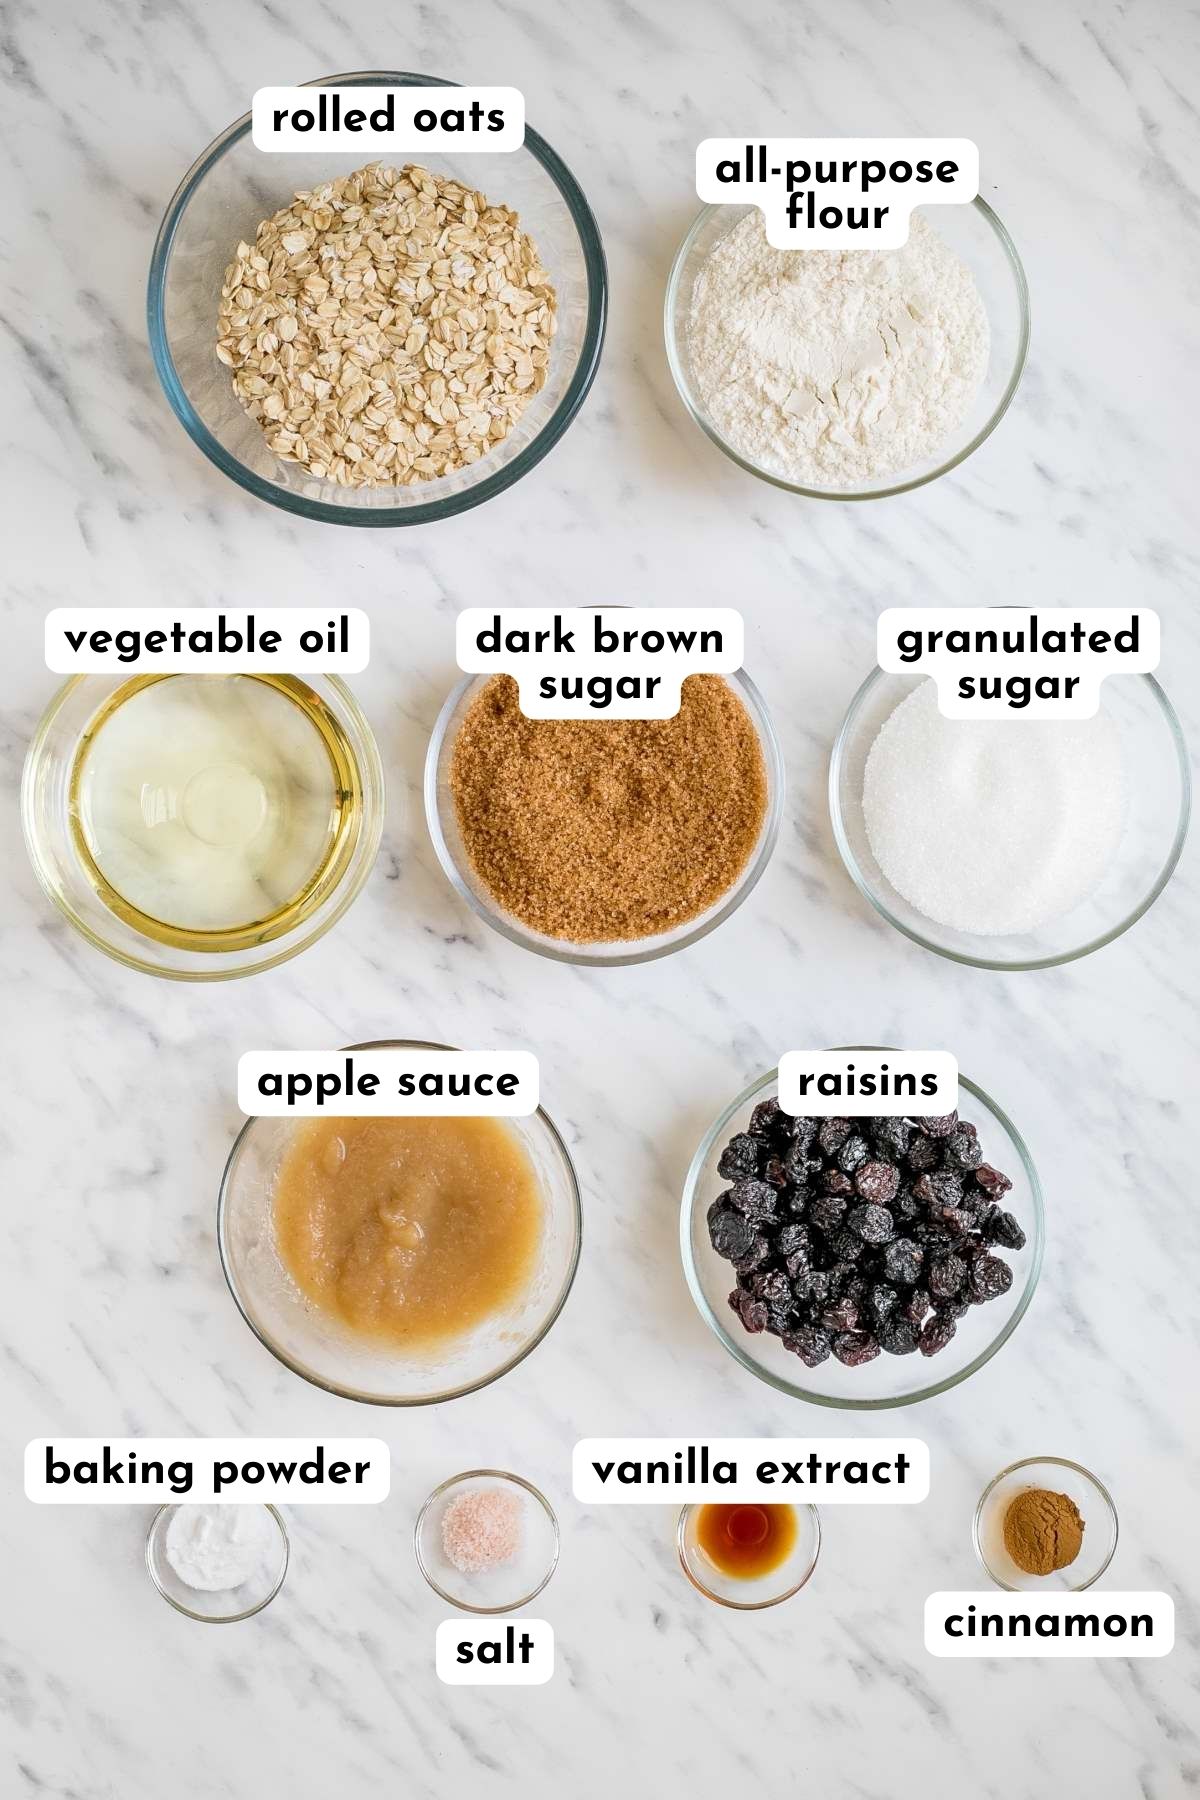 Ingredients of oatmeal raisin cookies in small glass bowls like flour, rolled oats, sugar, raisin, apple sauce, oil, salt, cinnamon, vanilla extract, and baking soda.